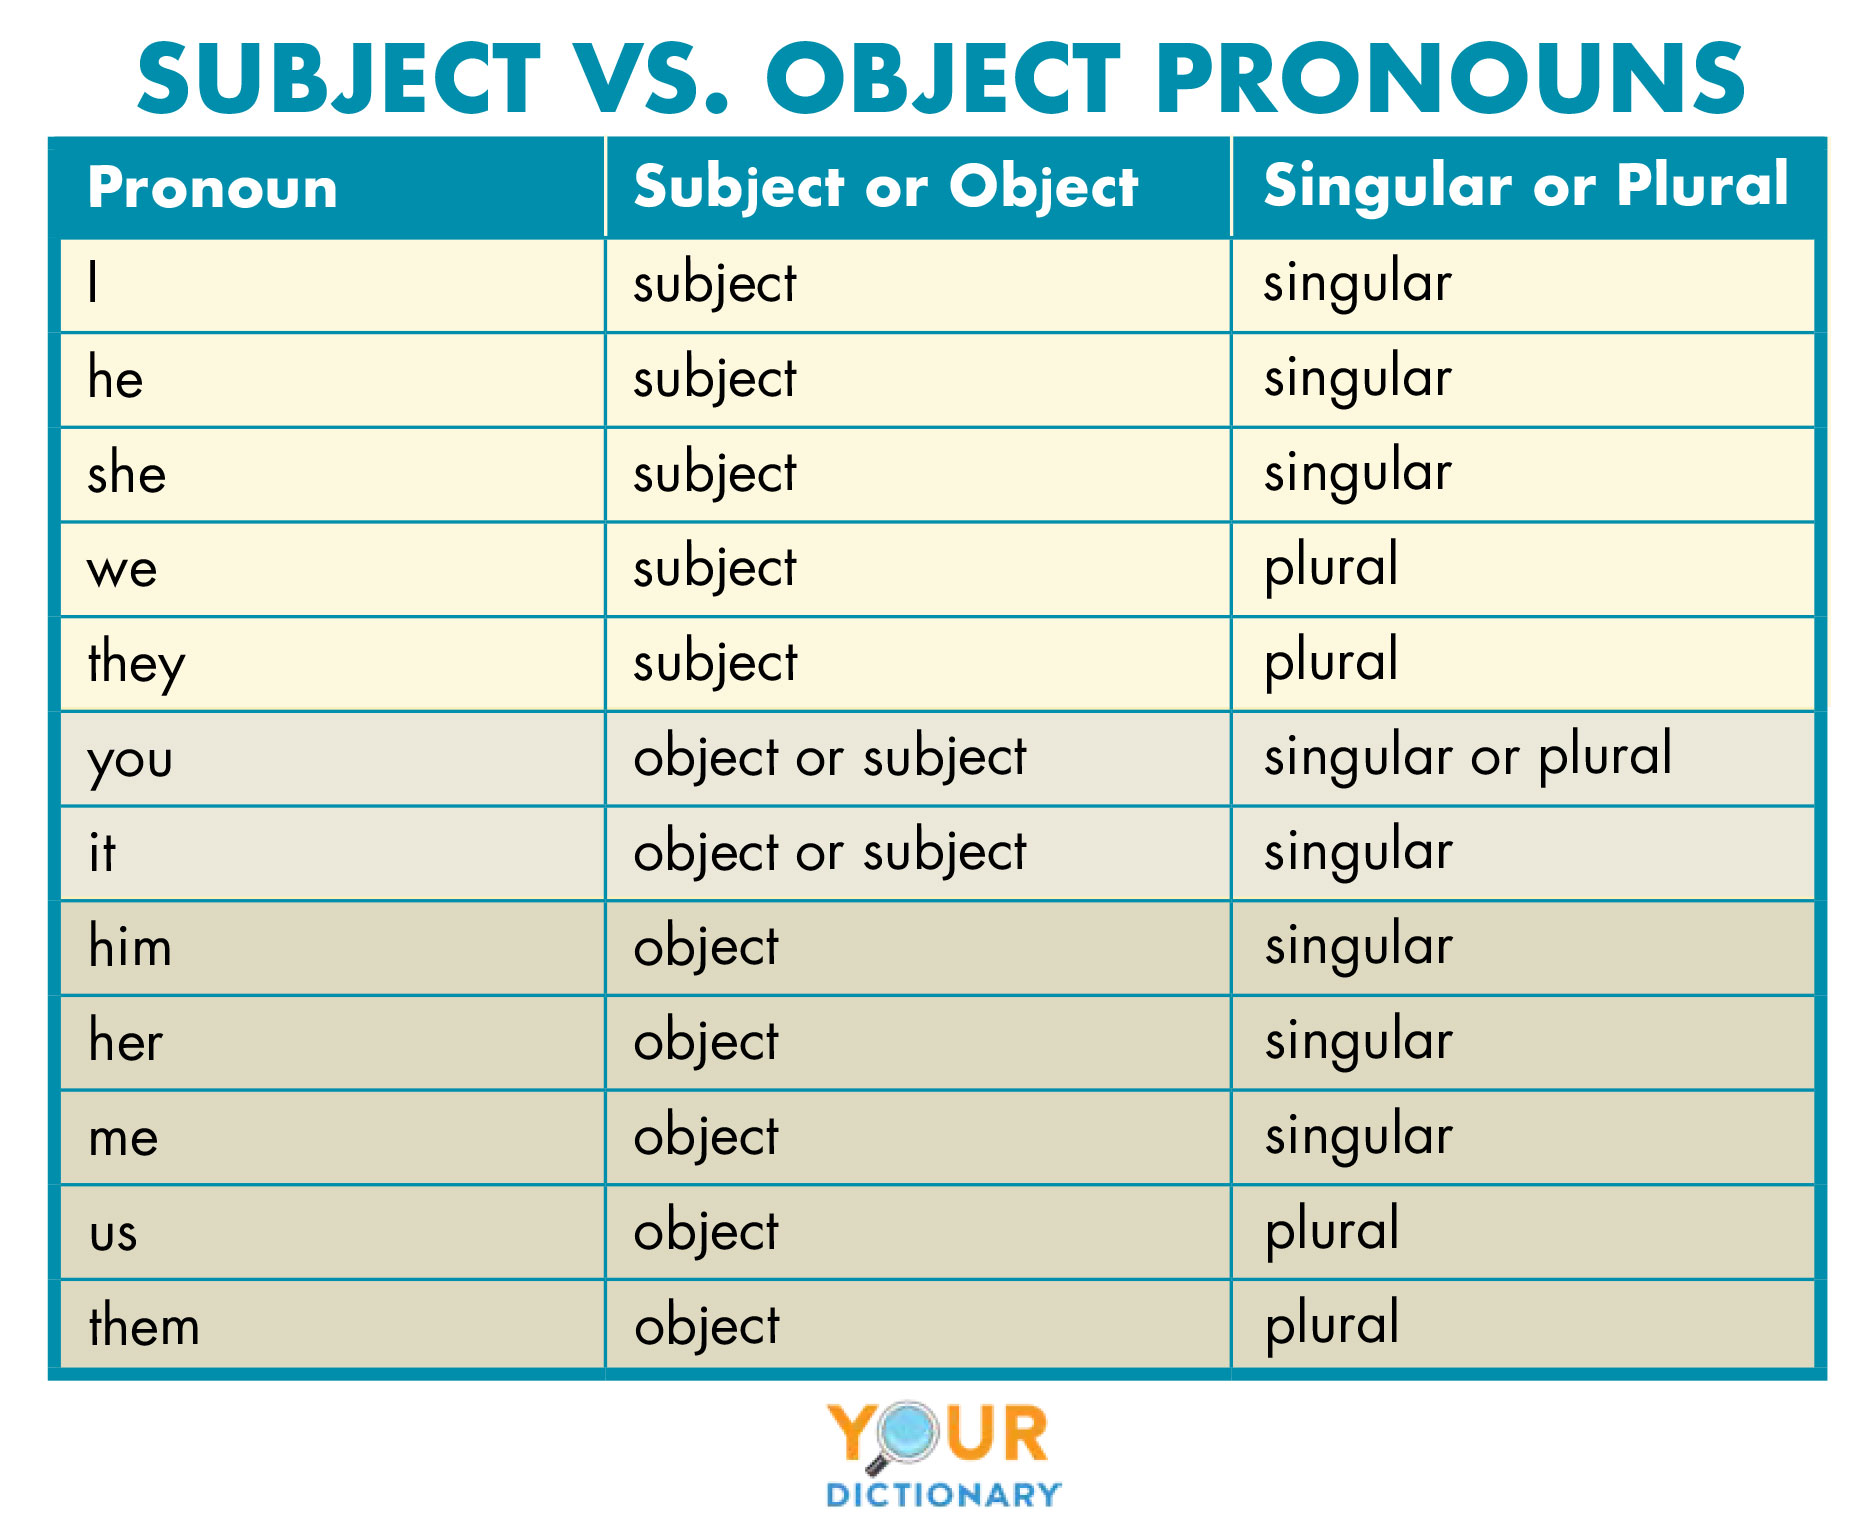 Subject Vs Object Pronouns